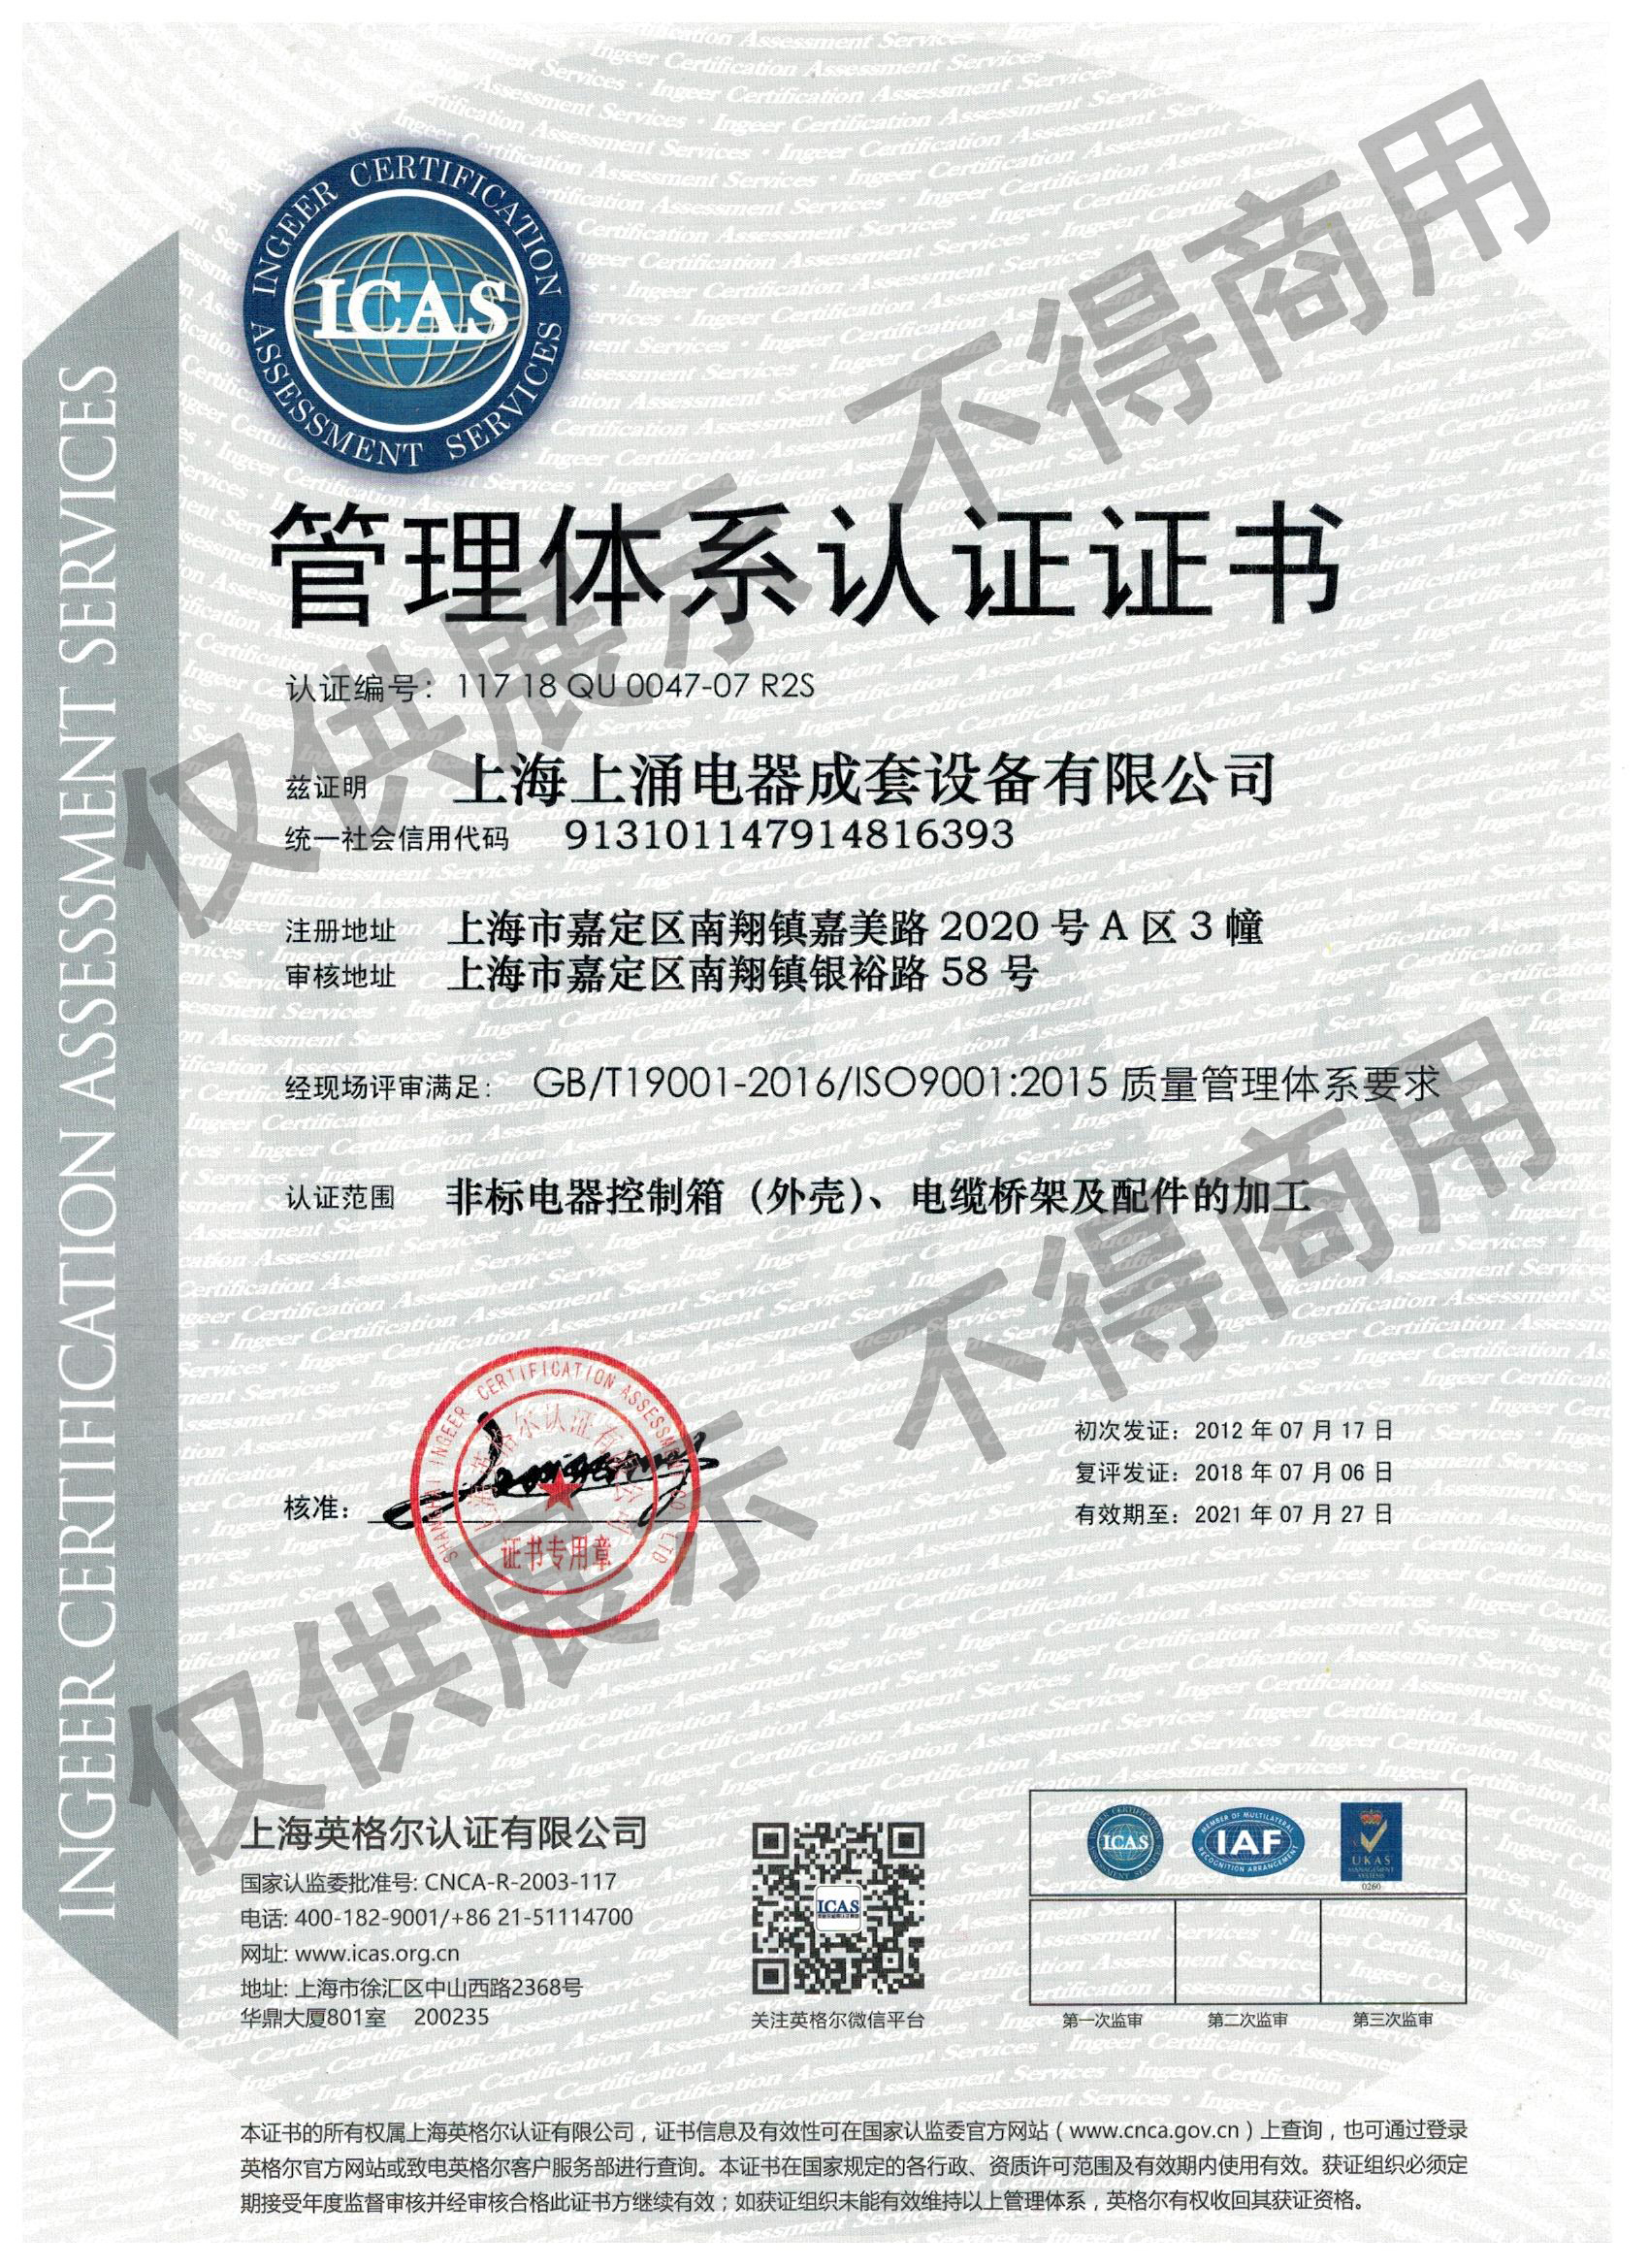 GB/T19001-2016/TSO9001:2015中文版认证证书